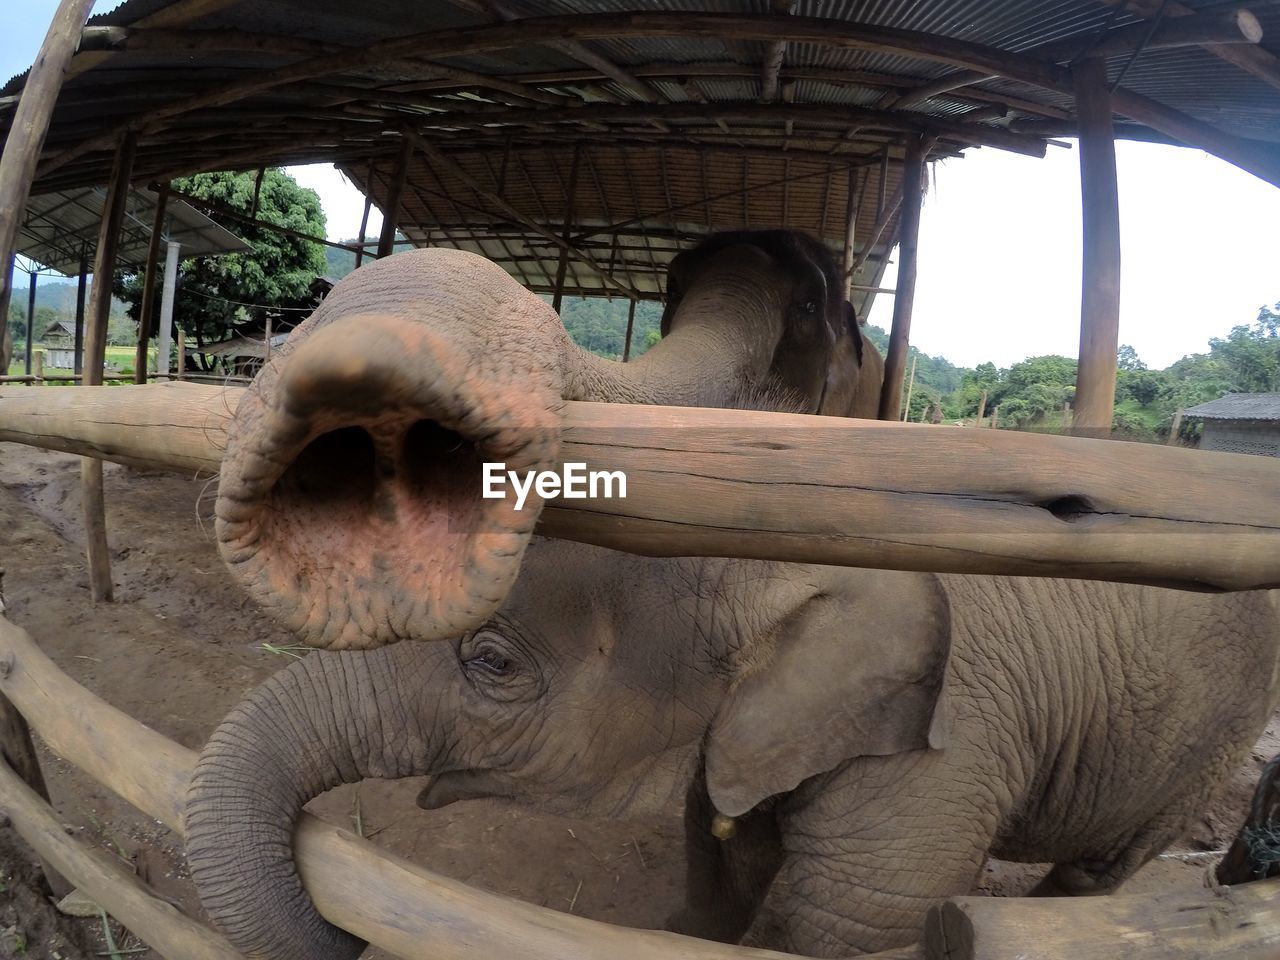 Close up of elephants